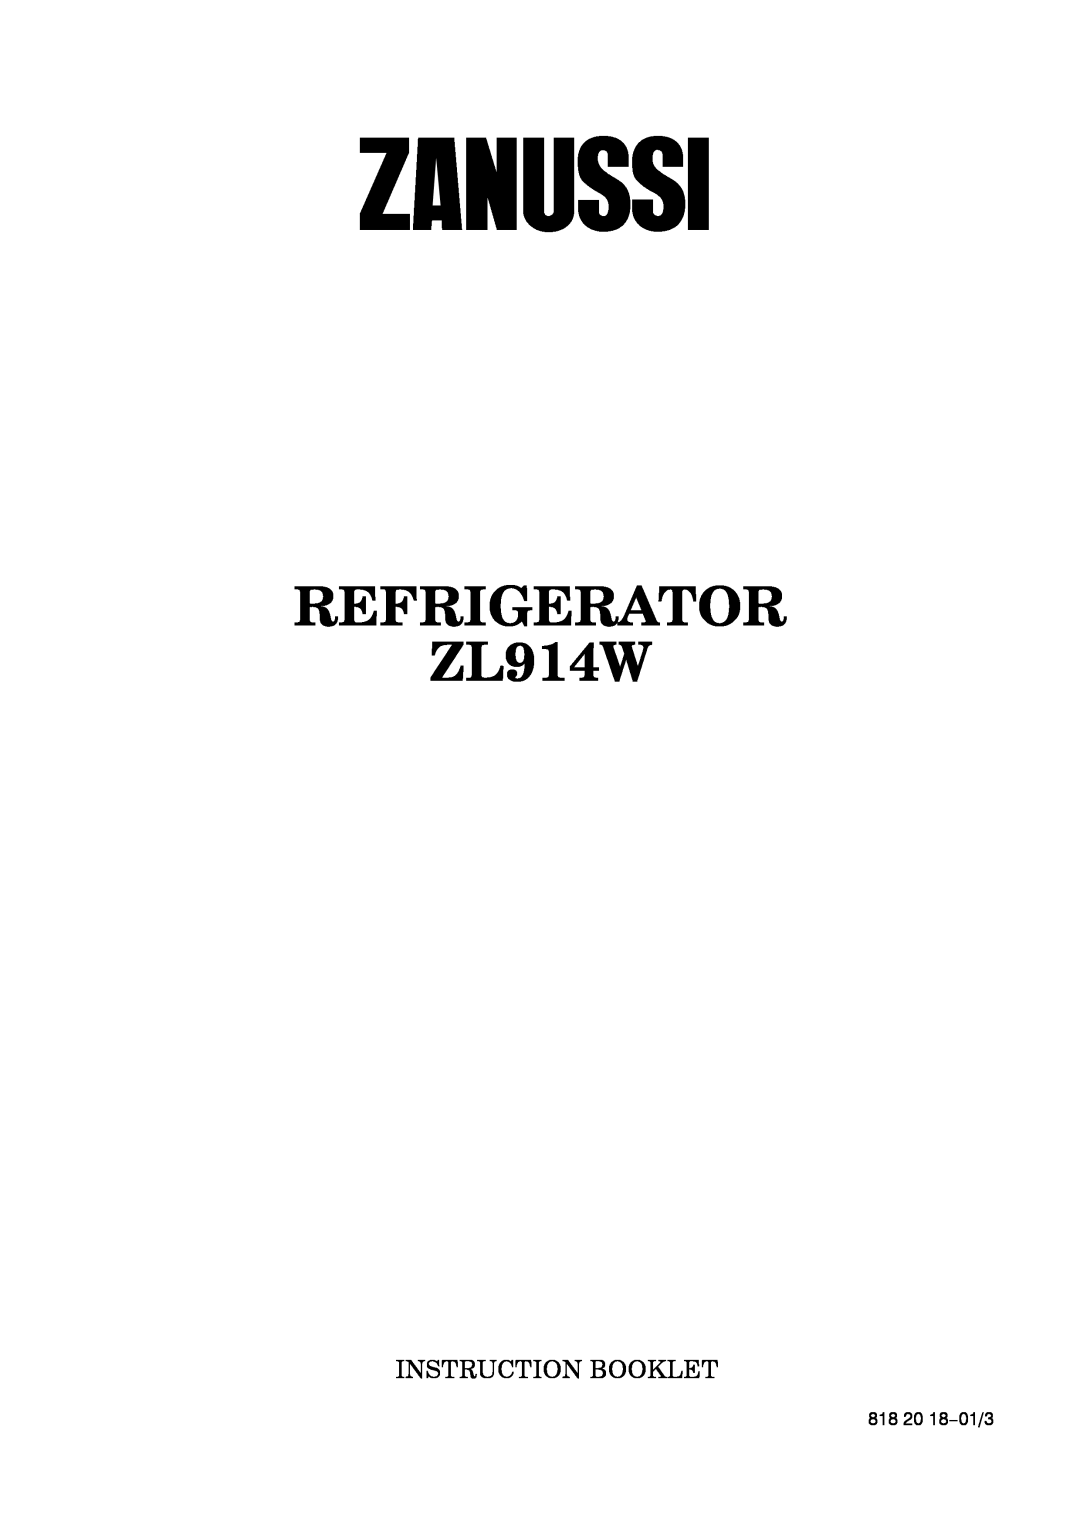 Zanussi manual REFRIGERATOR ZL914W, Instruction Booklet, 818 20 18--01/3 